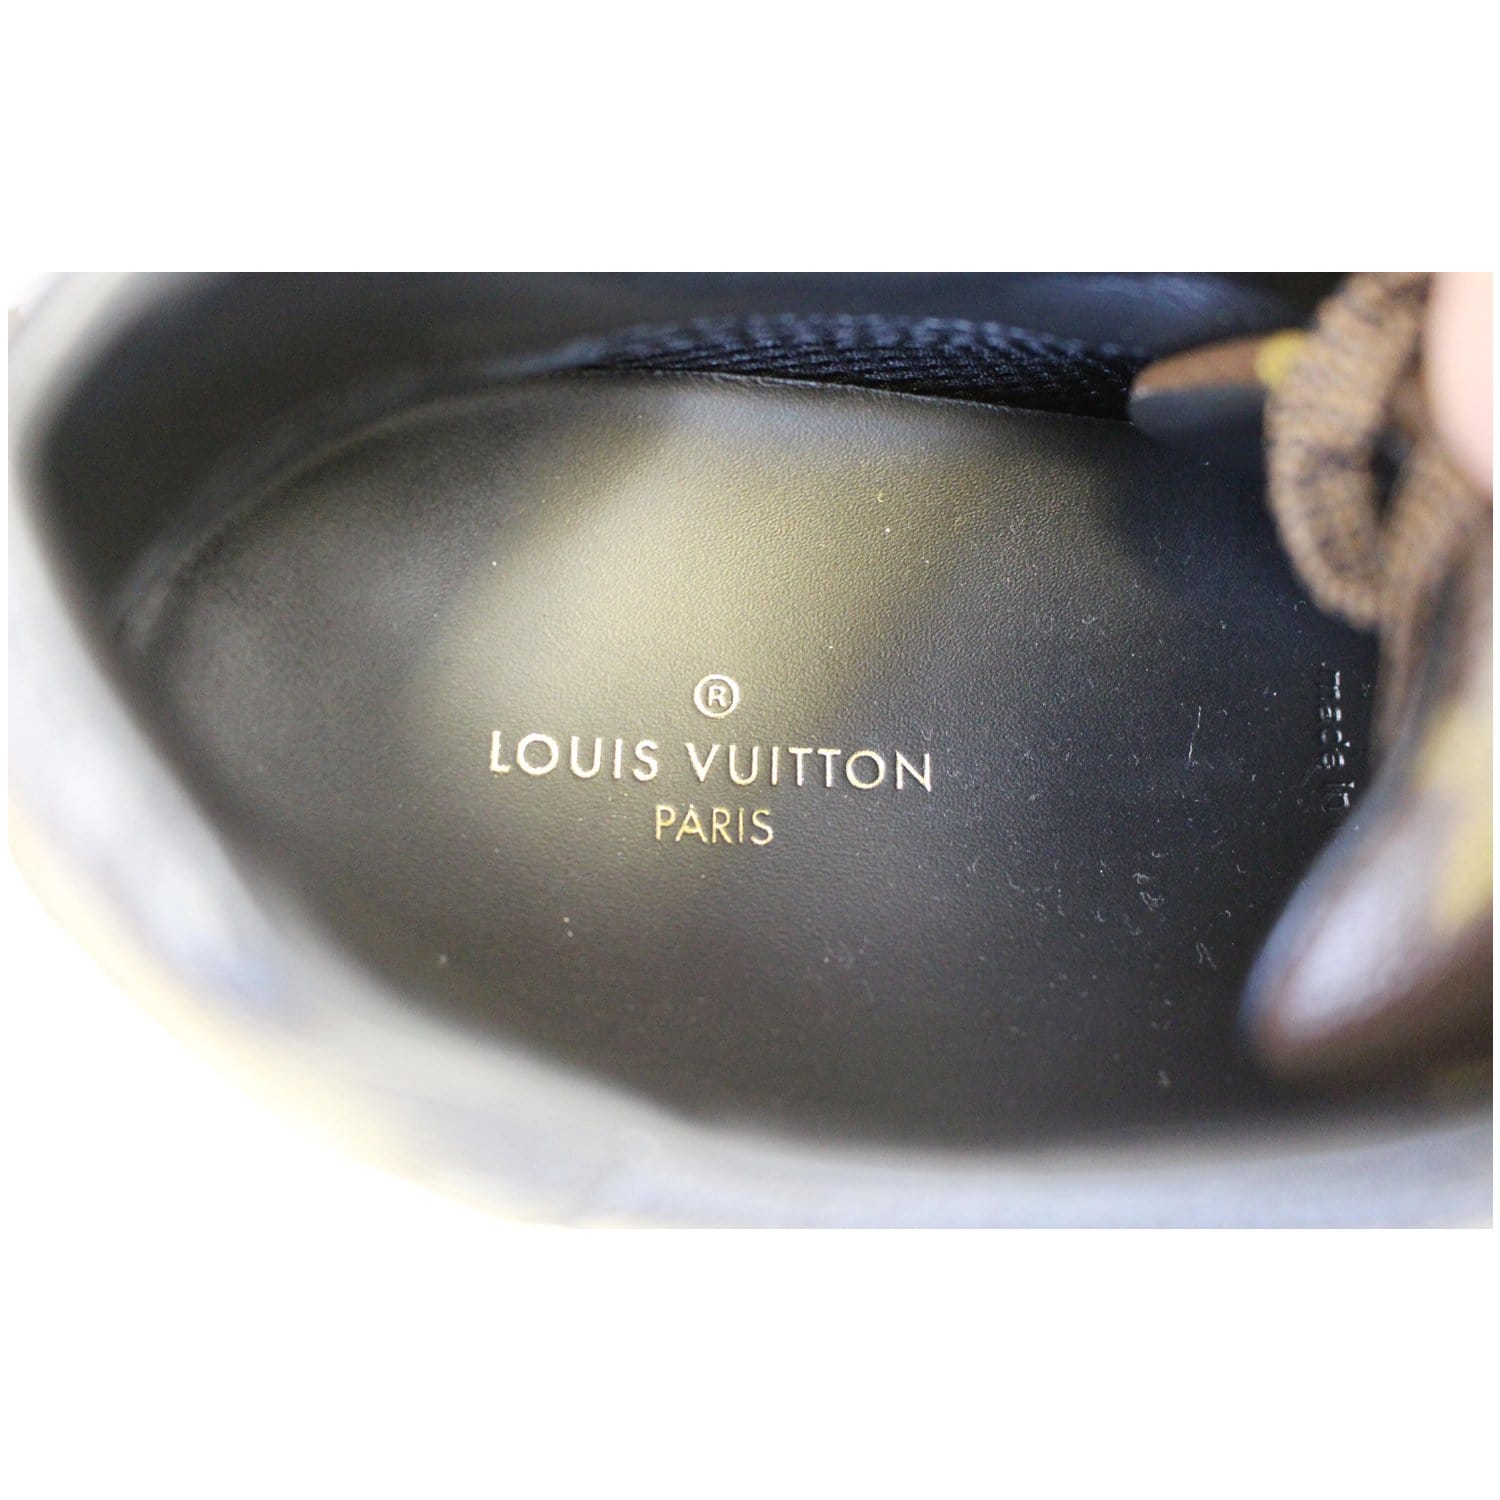 Louis Vuitton Run Away Sneaker Blue. Size 10.0